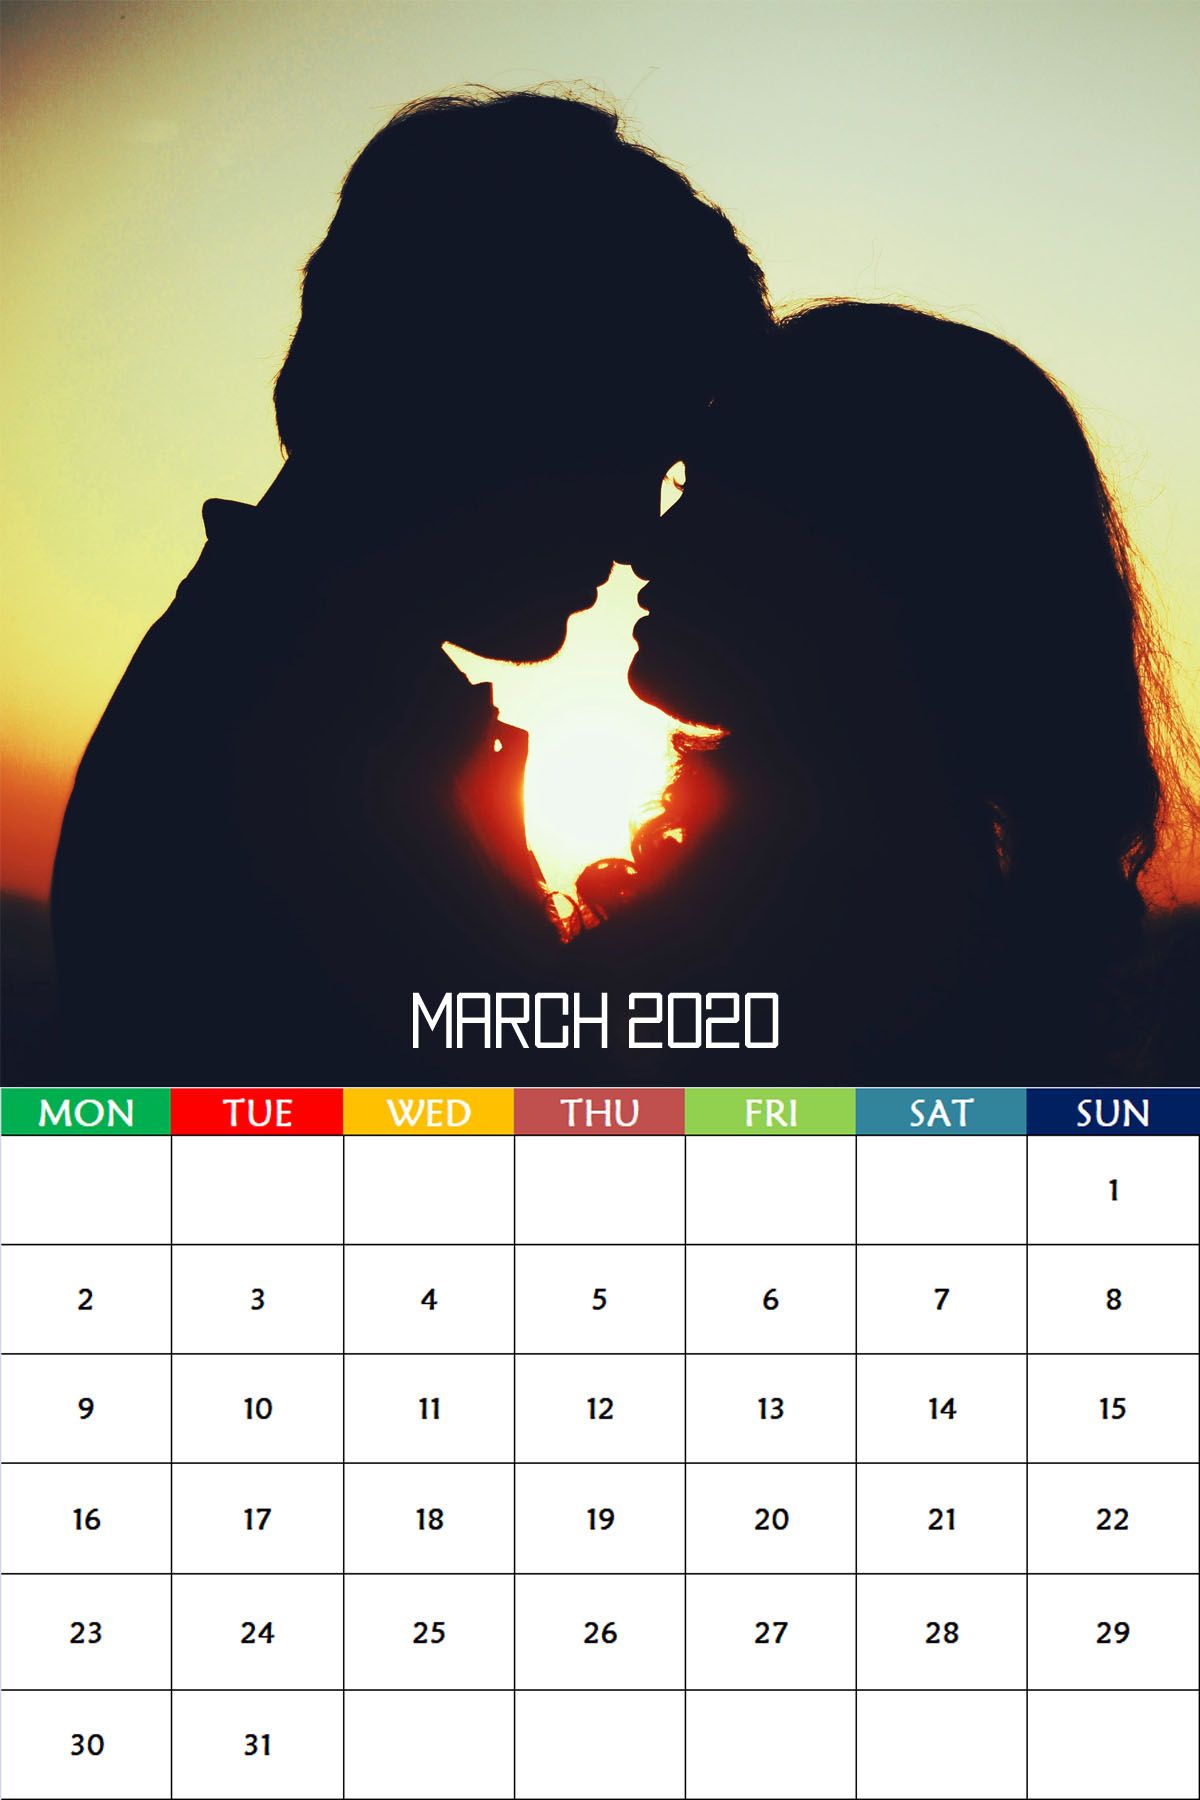 March Calendar Wallpaper For iPhone, Desktop, Mobile, Tablets